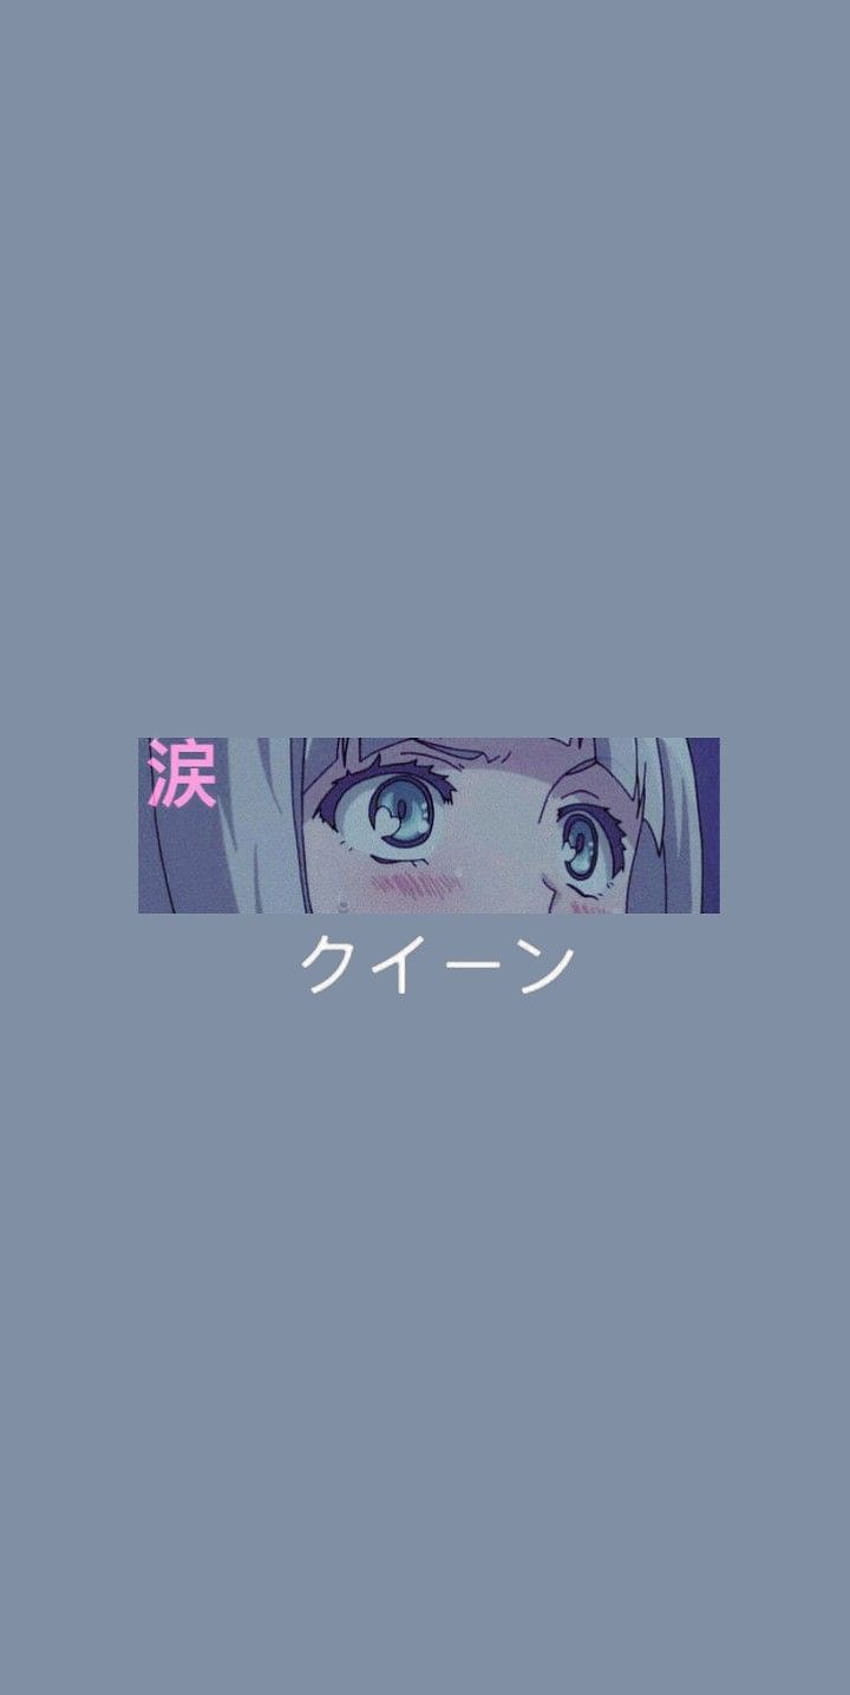 Lexica - Anime,wallpaper like pencil drawing, digital art of cute kawaii  girl with rabbit ears, light blue hair,bob,pink eyes,holding a  Omikuji,backg...